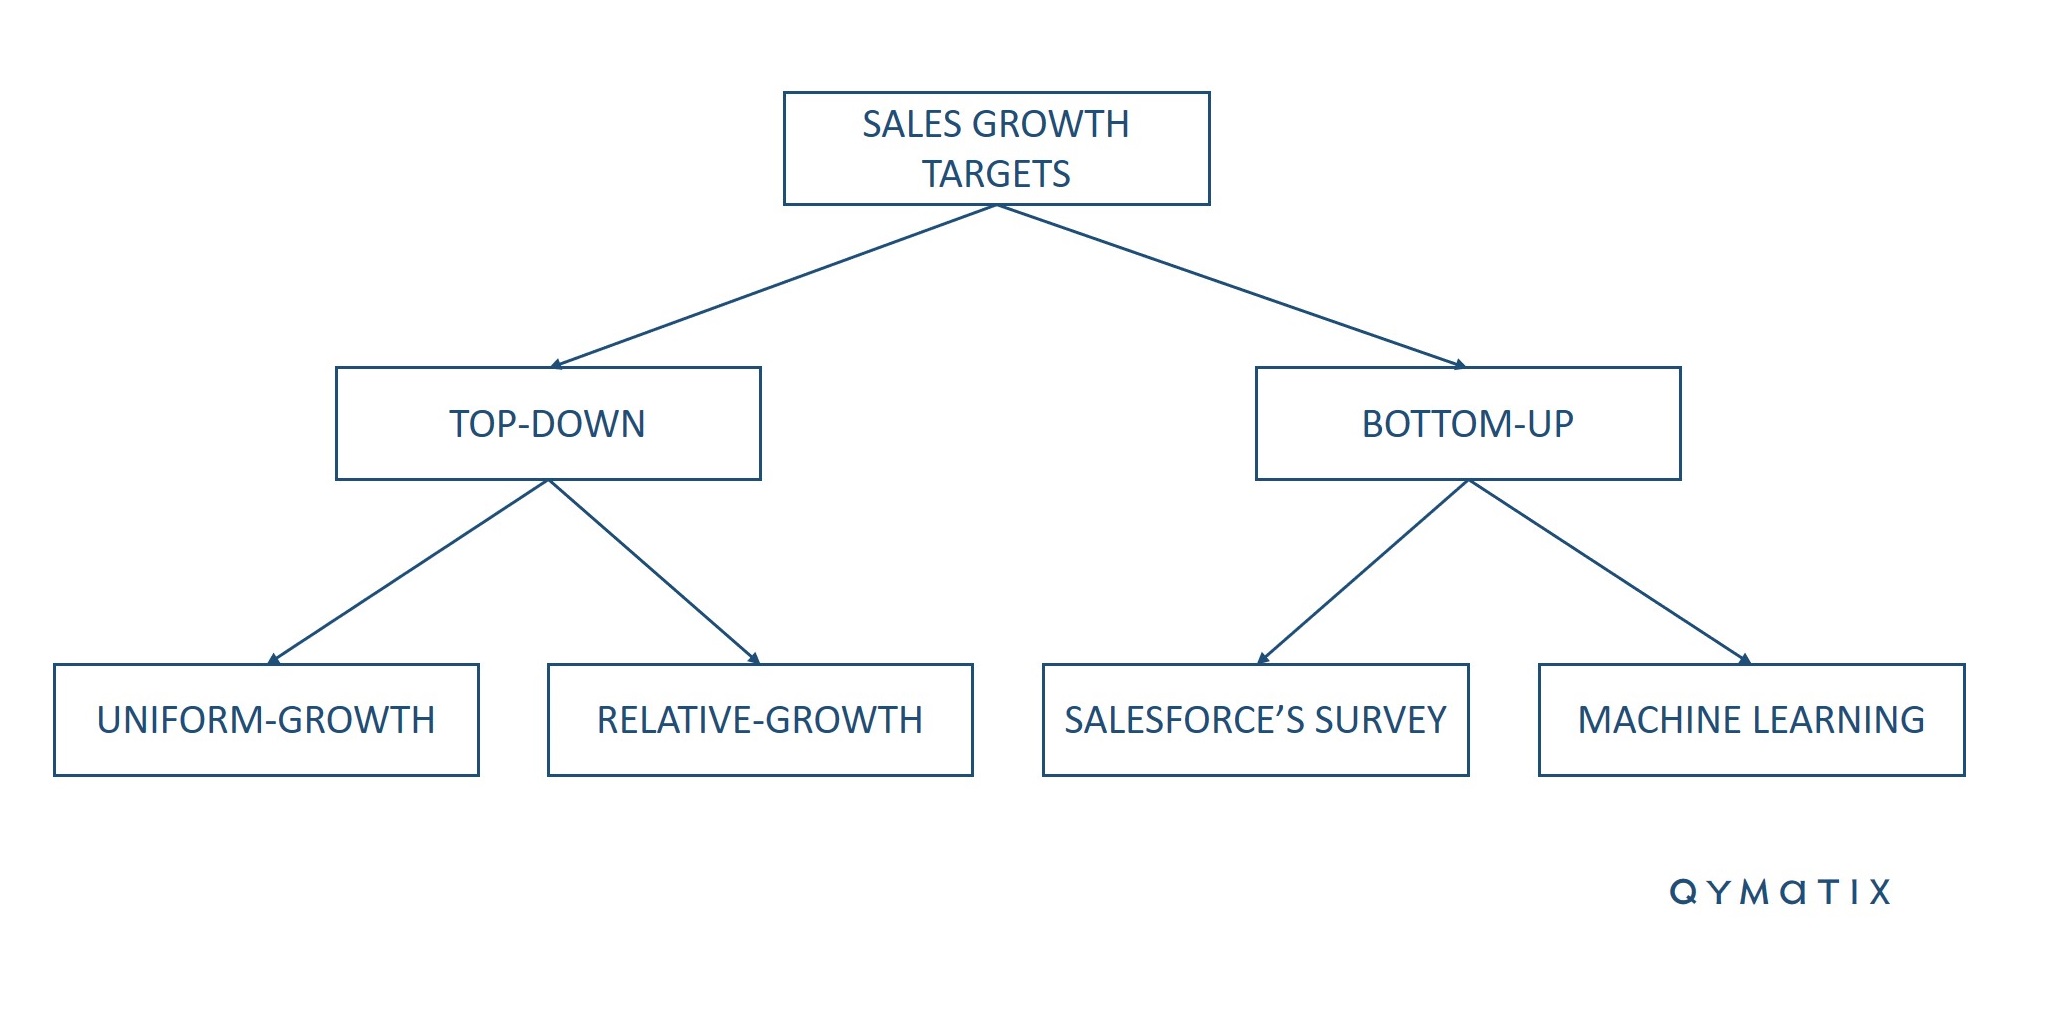 b2b sales growth with predictive analytics